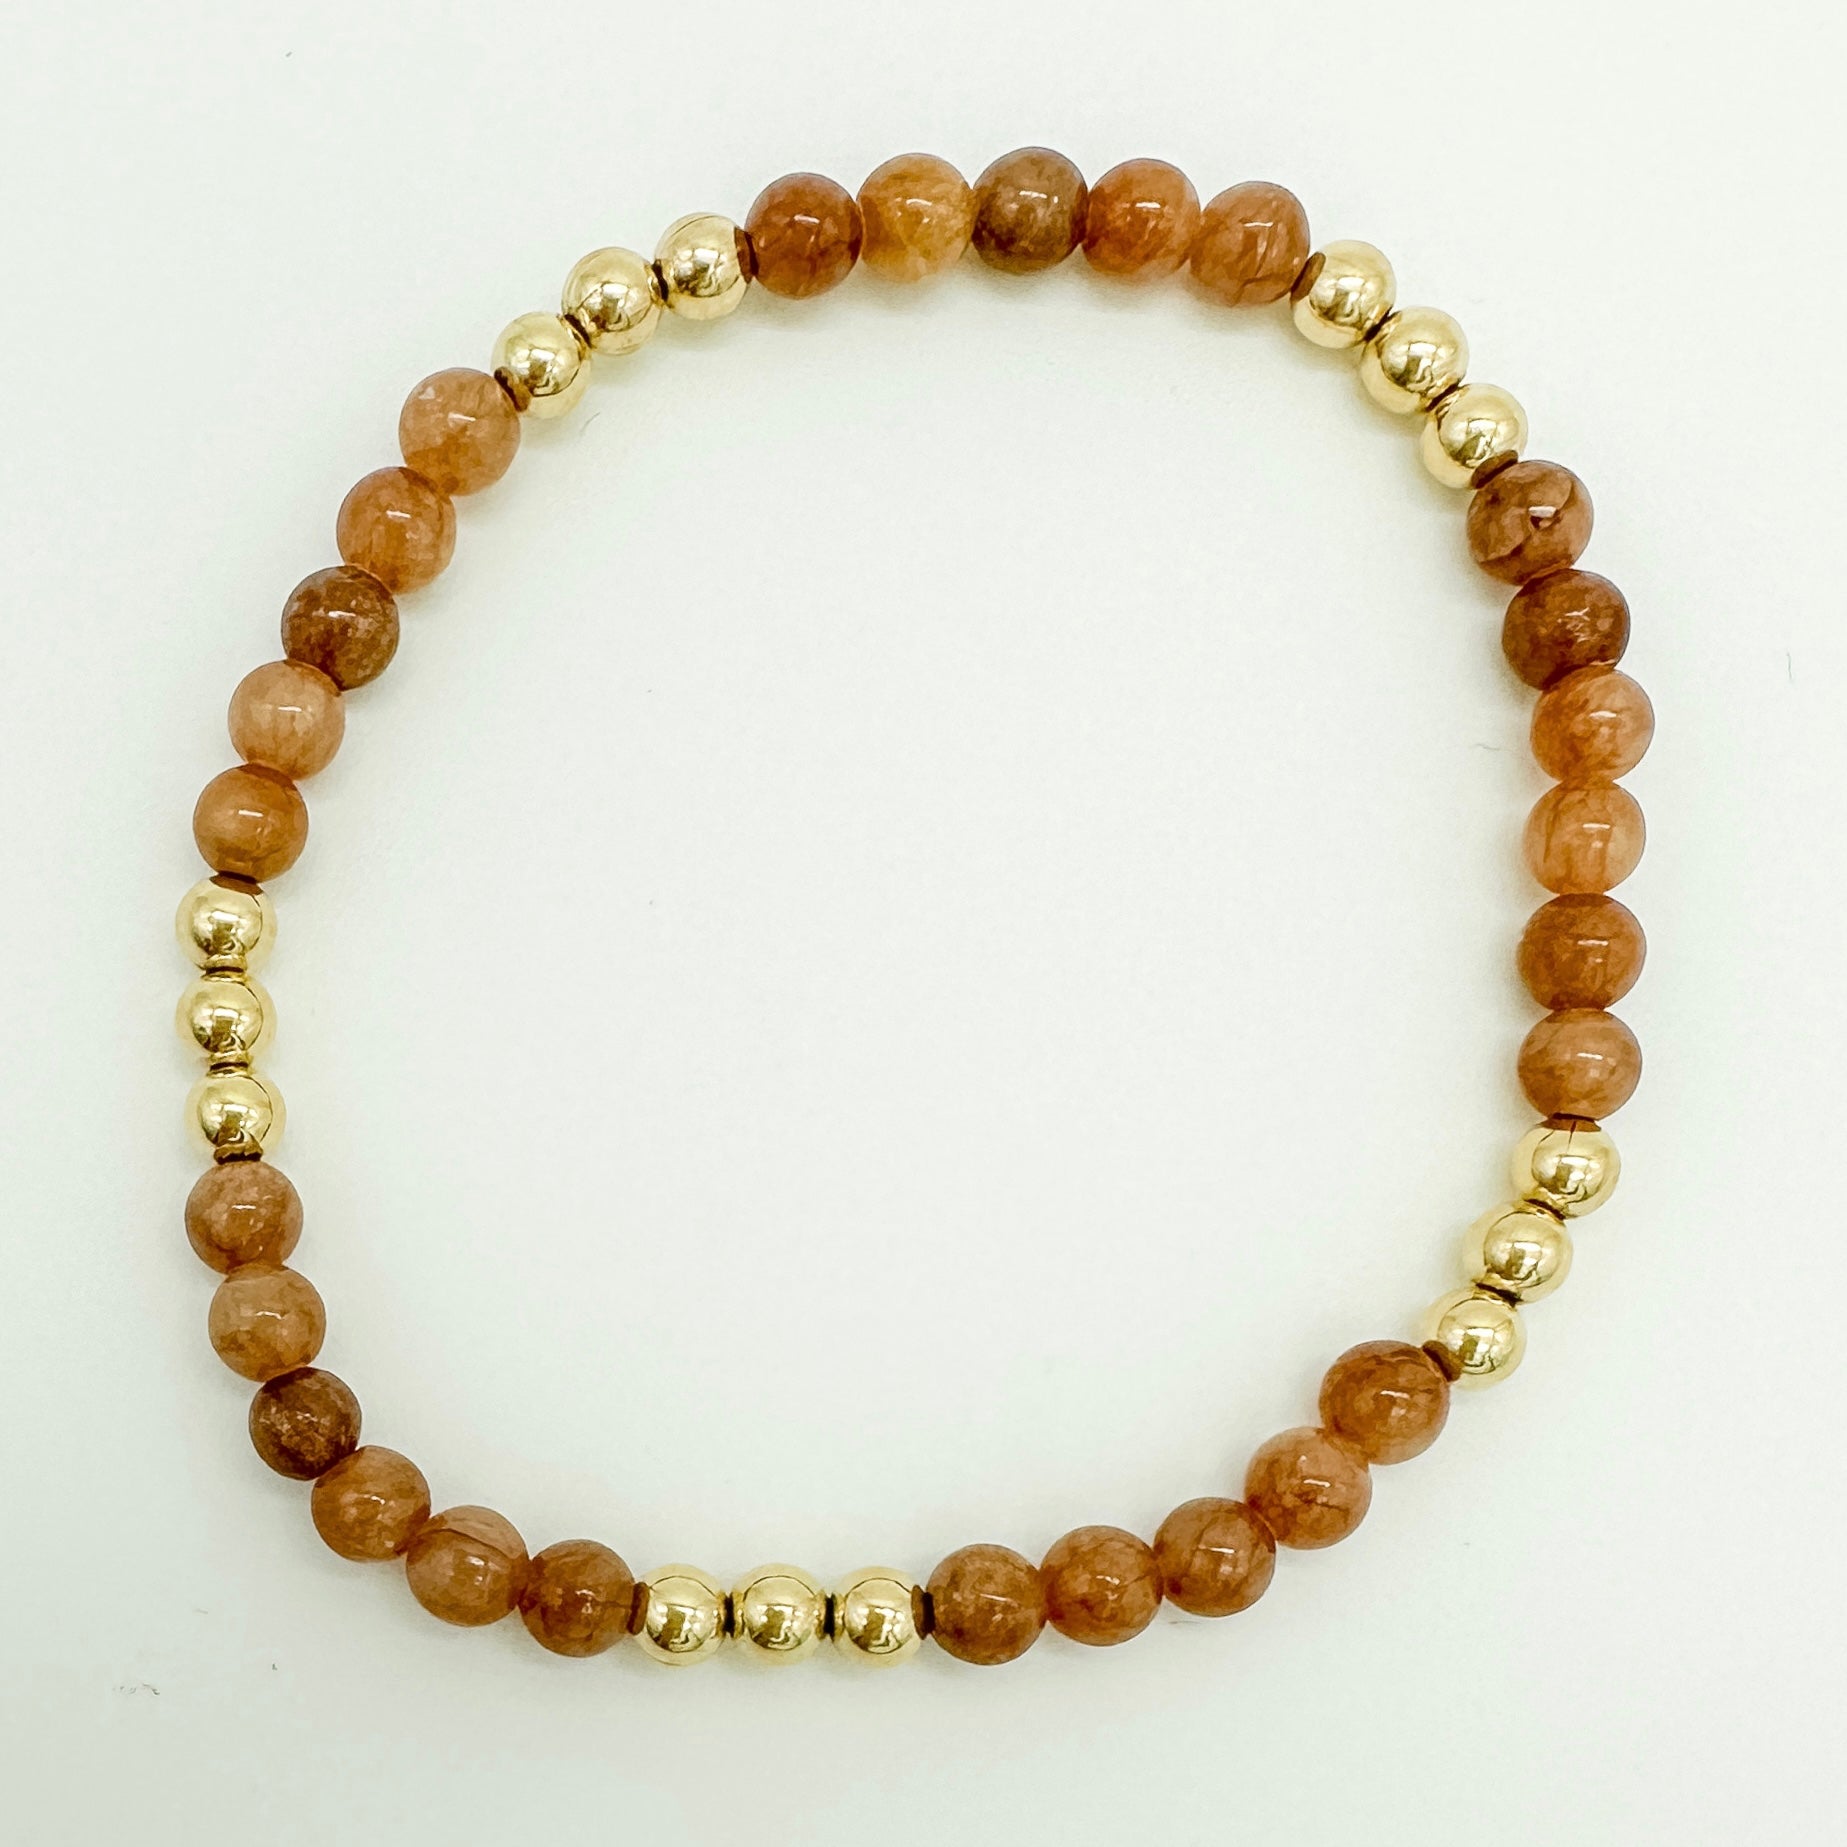 gemstone beaded bracelet / wholesale jewelry / hand-beaded bracelet / permanent jewelry supplier / jade beaded bracelet